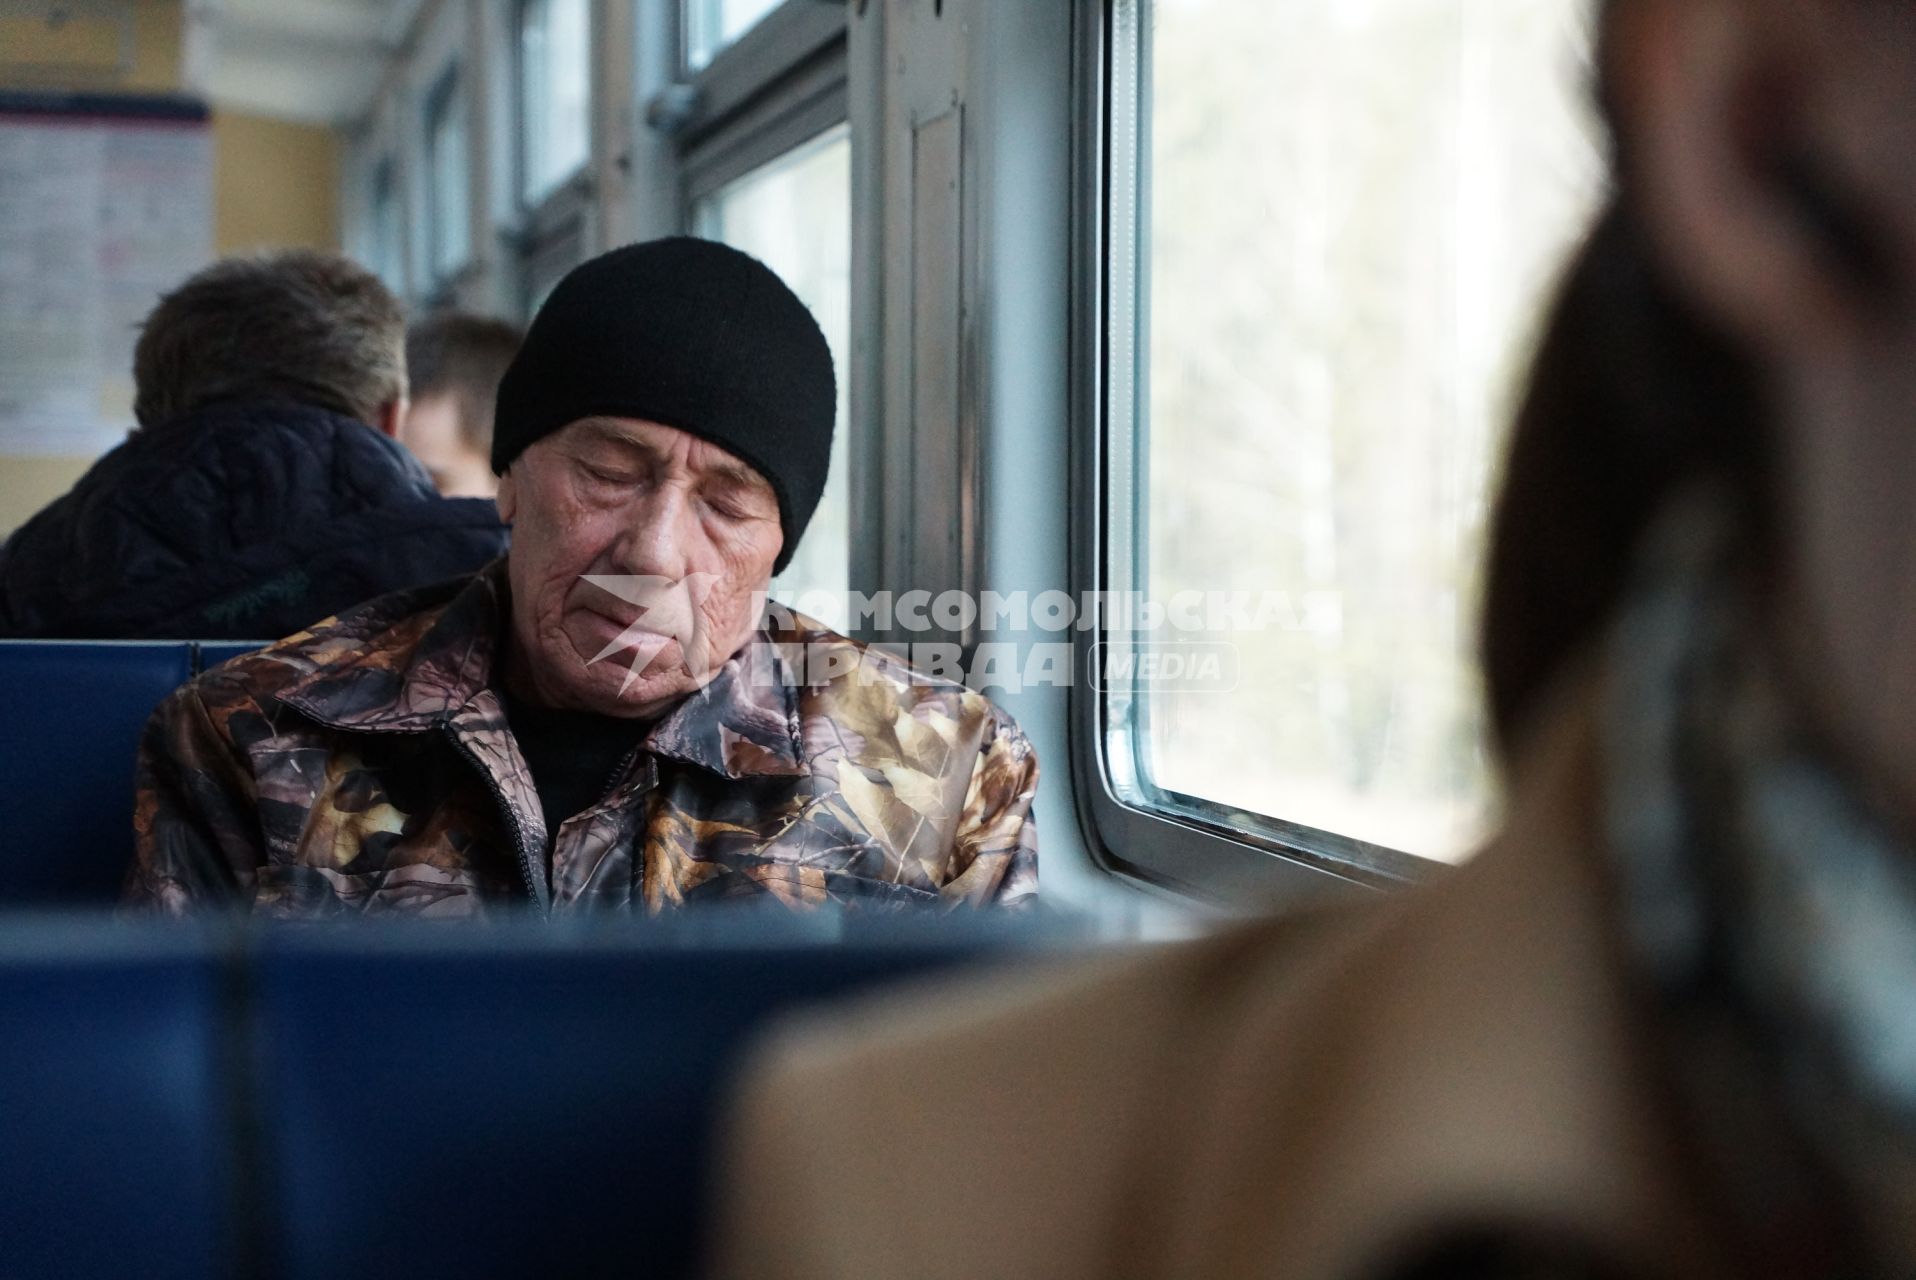 Екатеринбург. Пассажир спит в вагоне электрички.